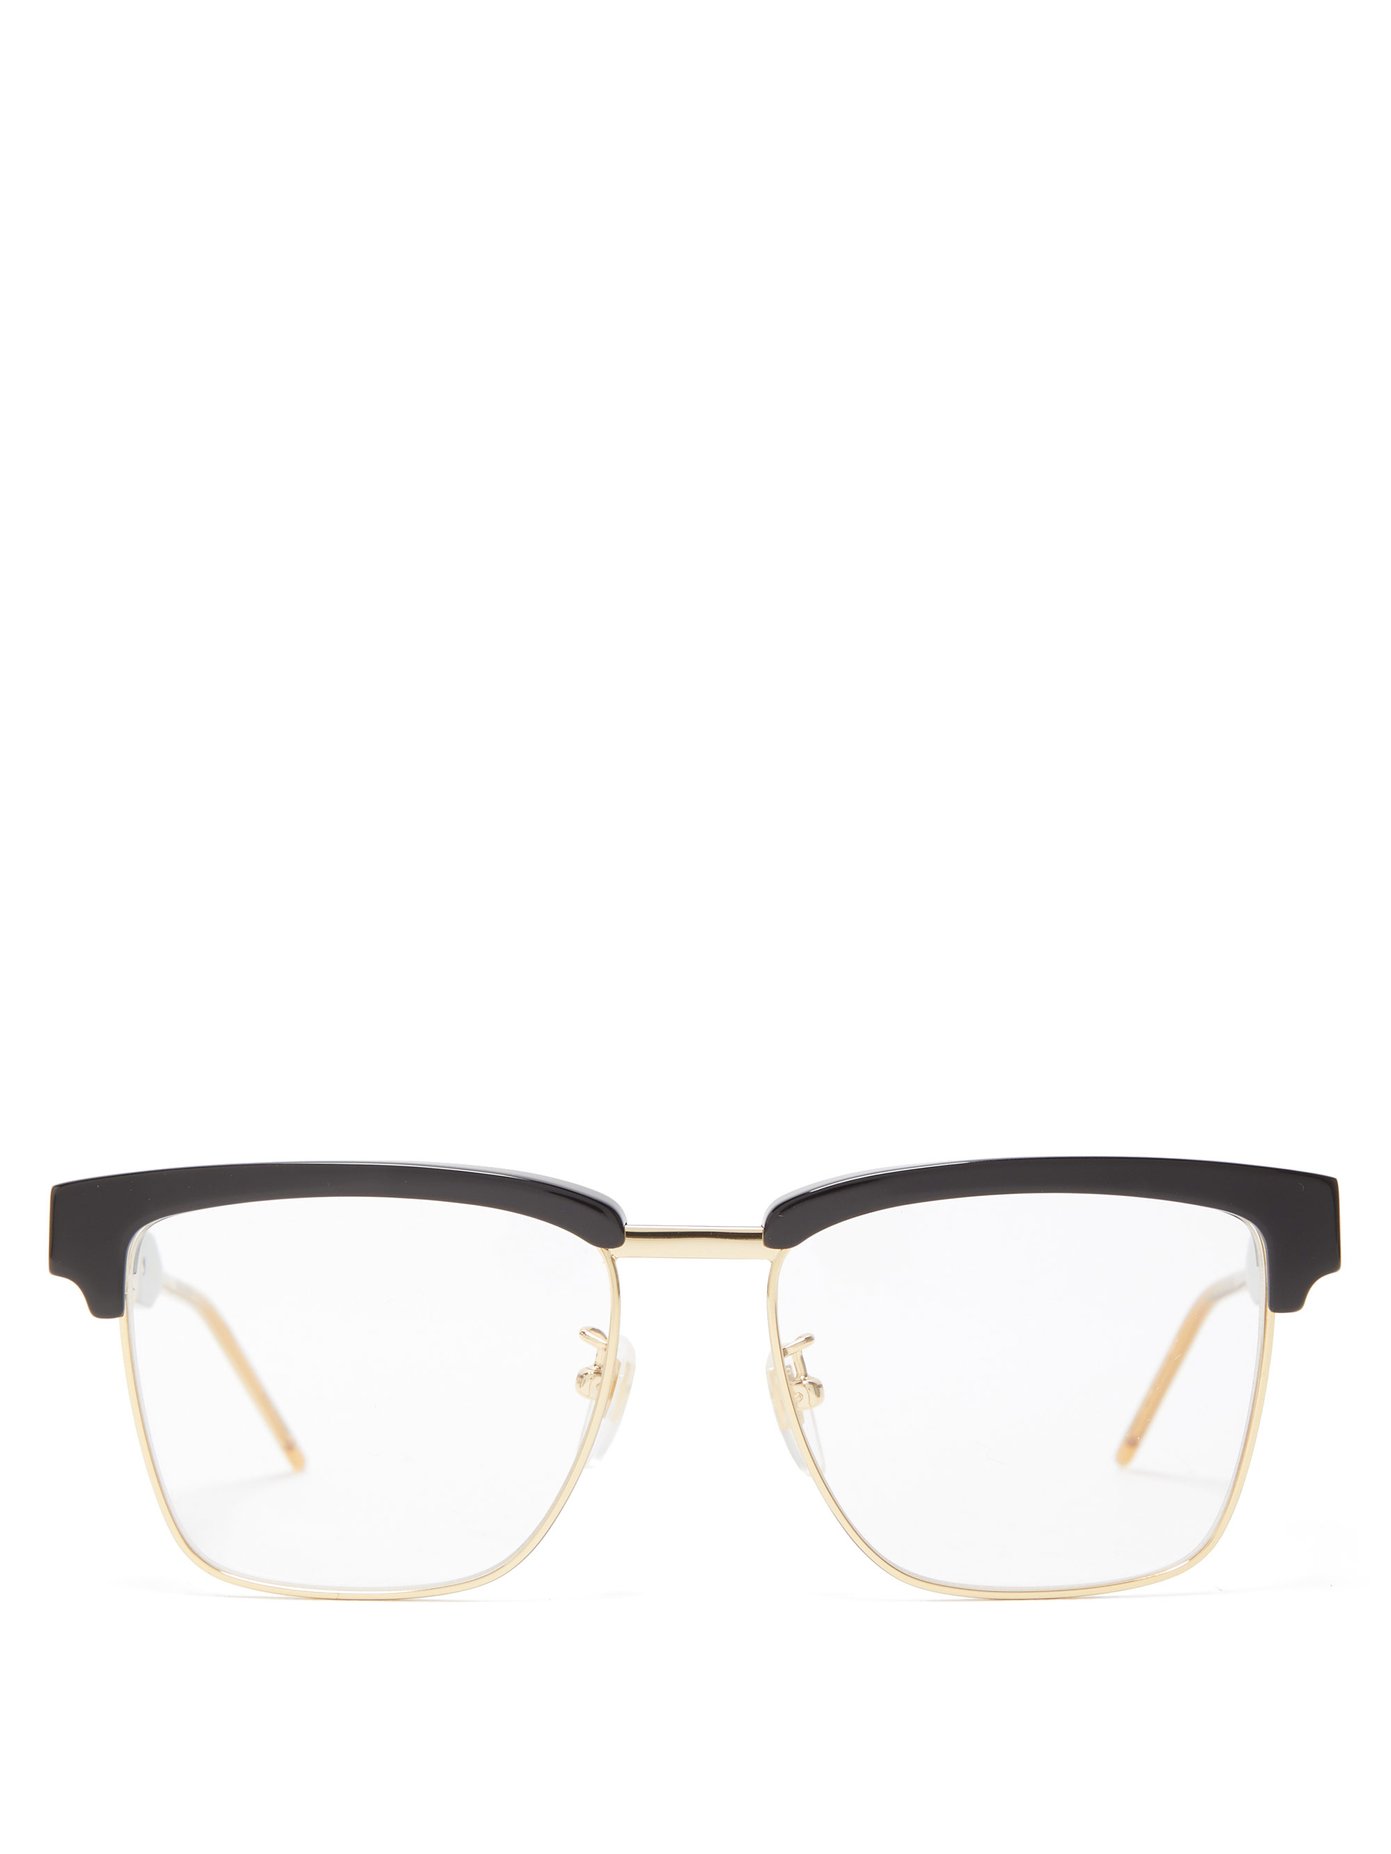 gucci glasses frame